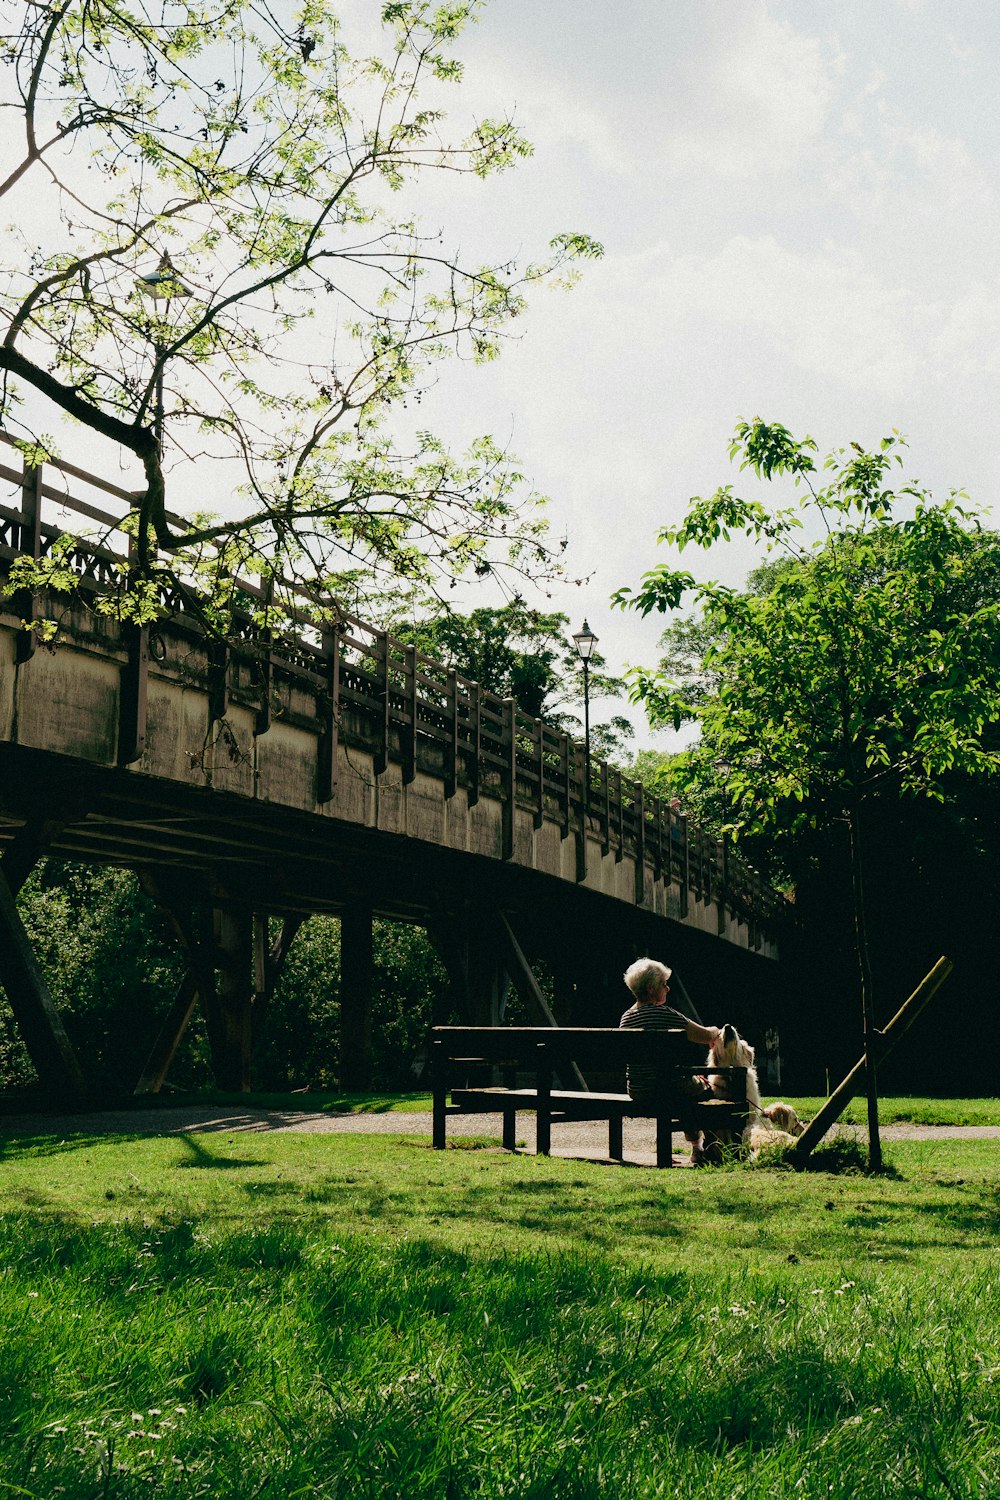 a man sitting on a bench under a bridge